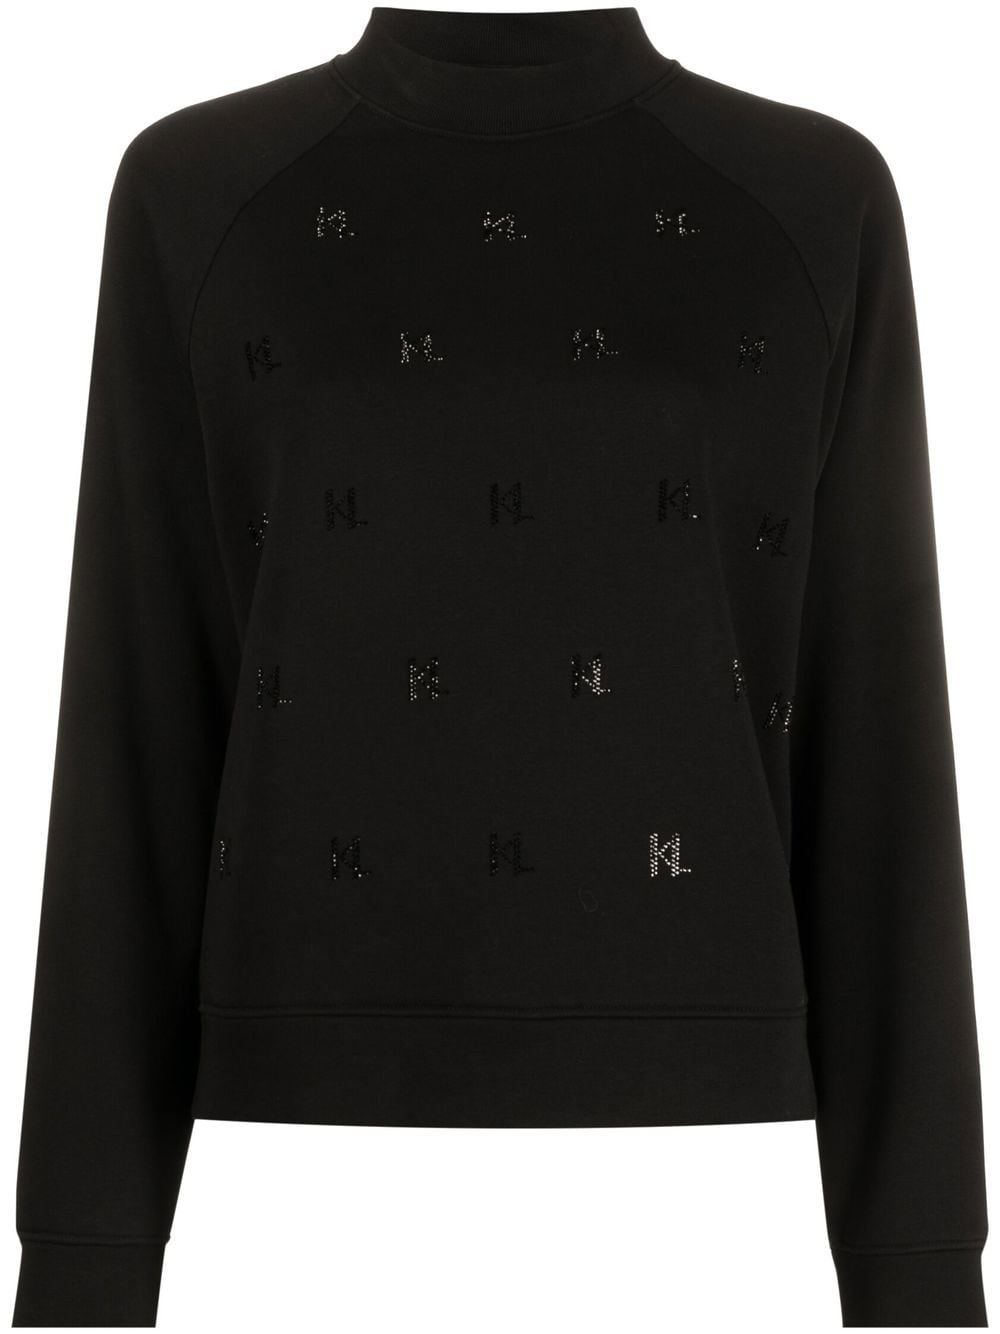 Image 1 of Karl Lagerfeld monogram rhinestone sweatshirt